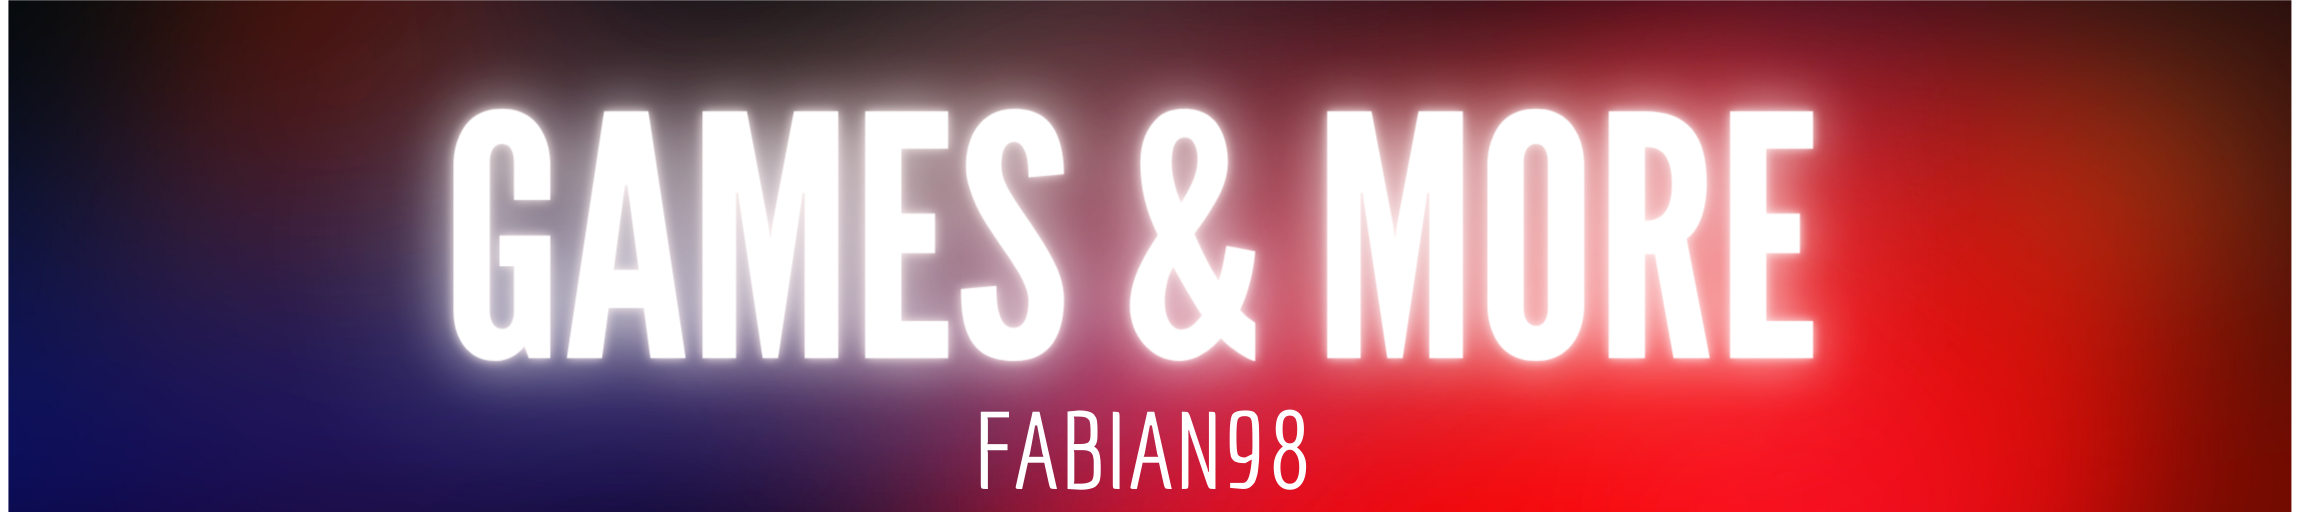 Fabian98's cover